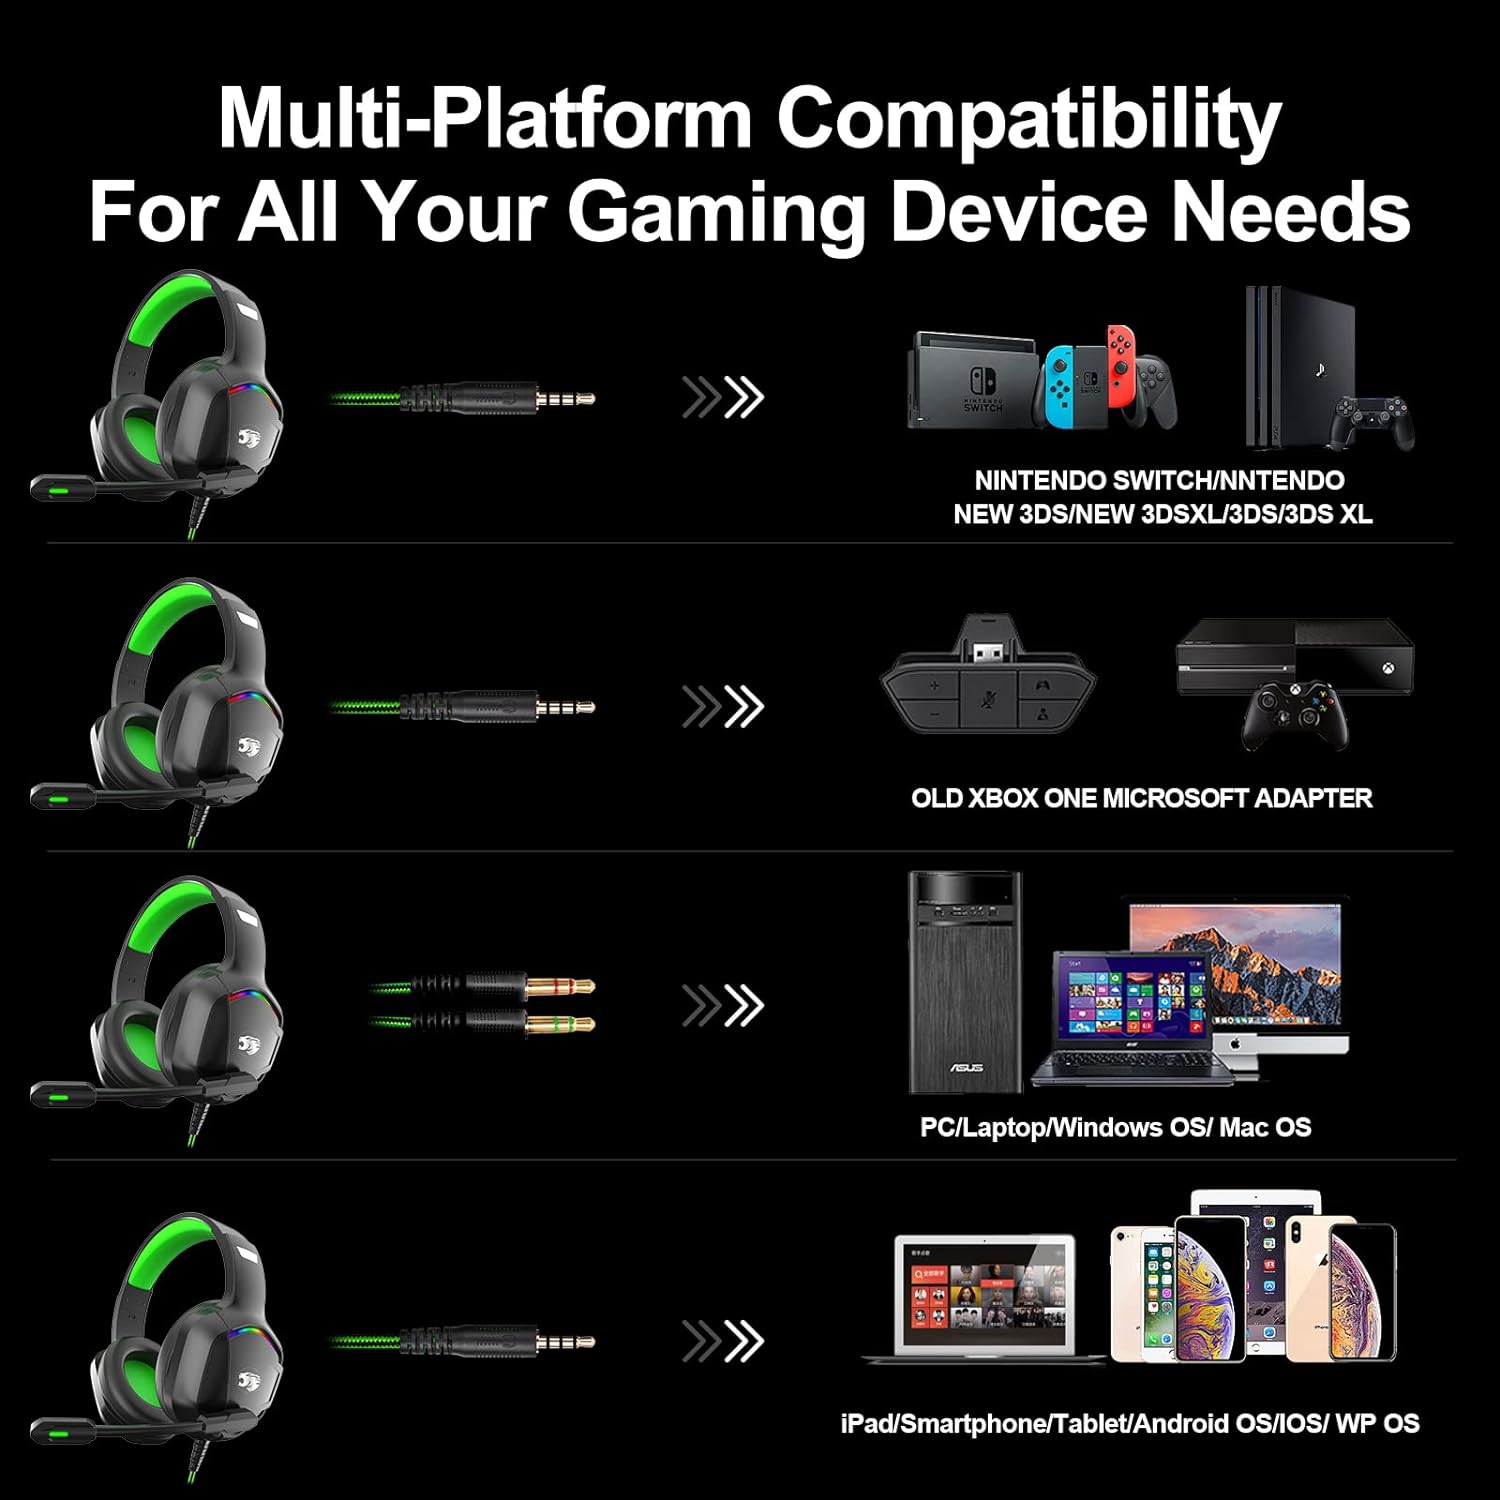 Auriculares para juegos con micrófono para PC, Xbox One Series Xs, PS4 -  VIRTUAL MUEBLES